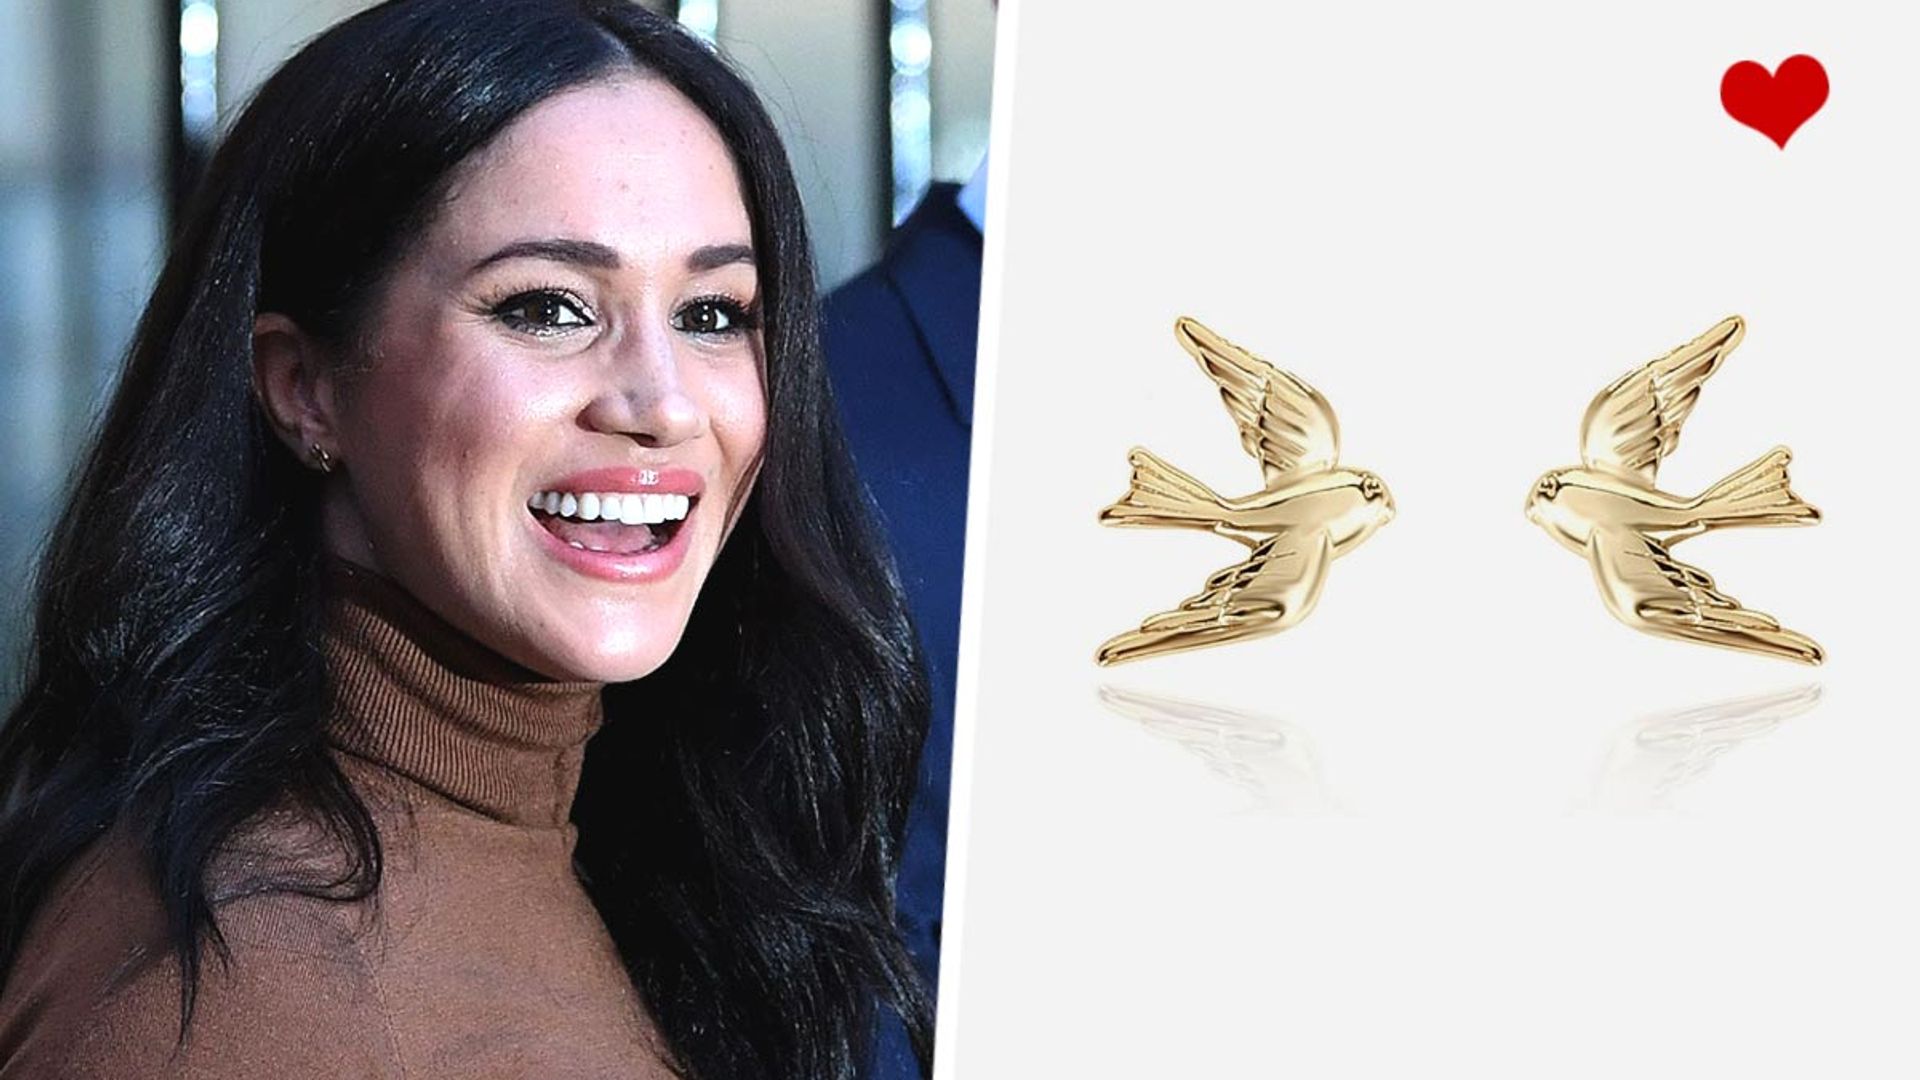 Loved Meghan Markle’s swallow earrings? Amazon is selling a near-identical pair